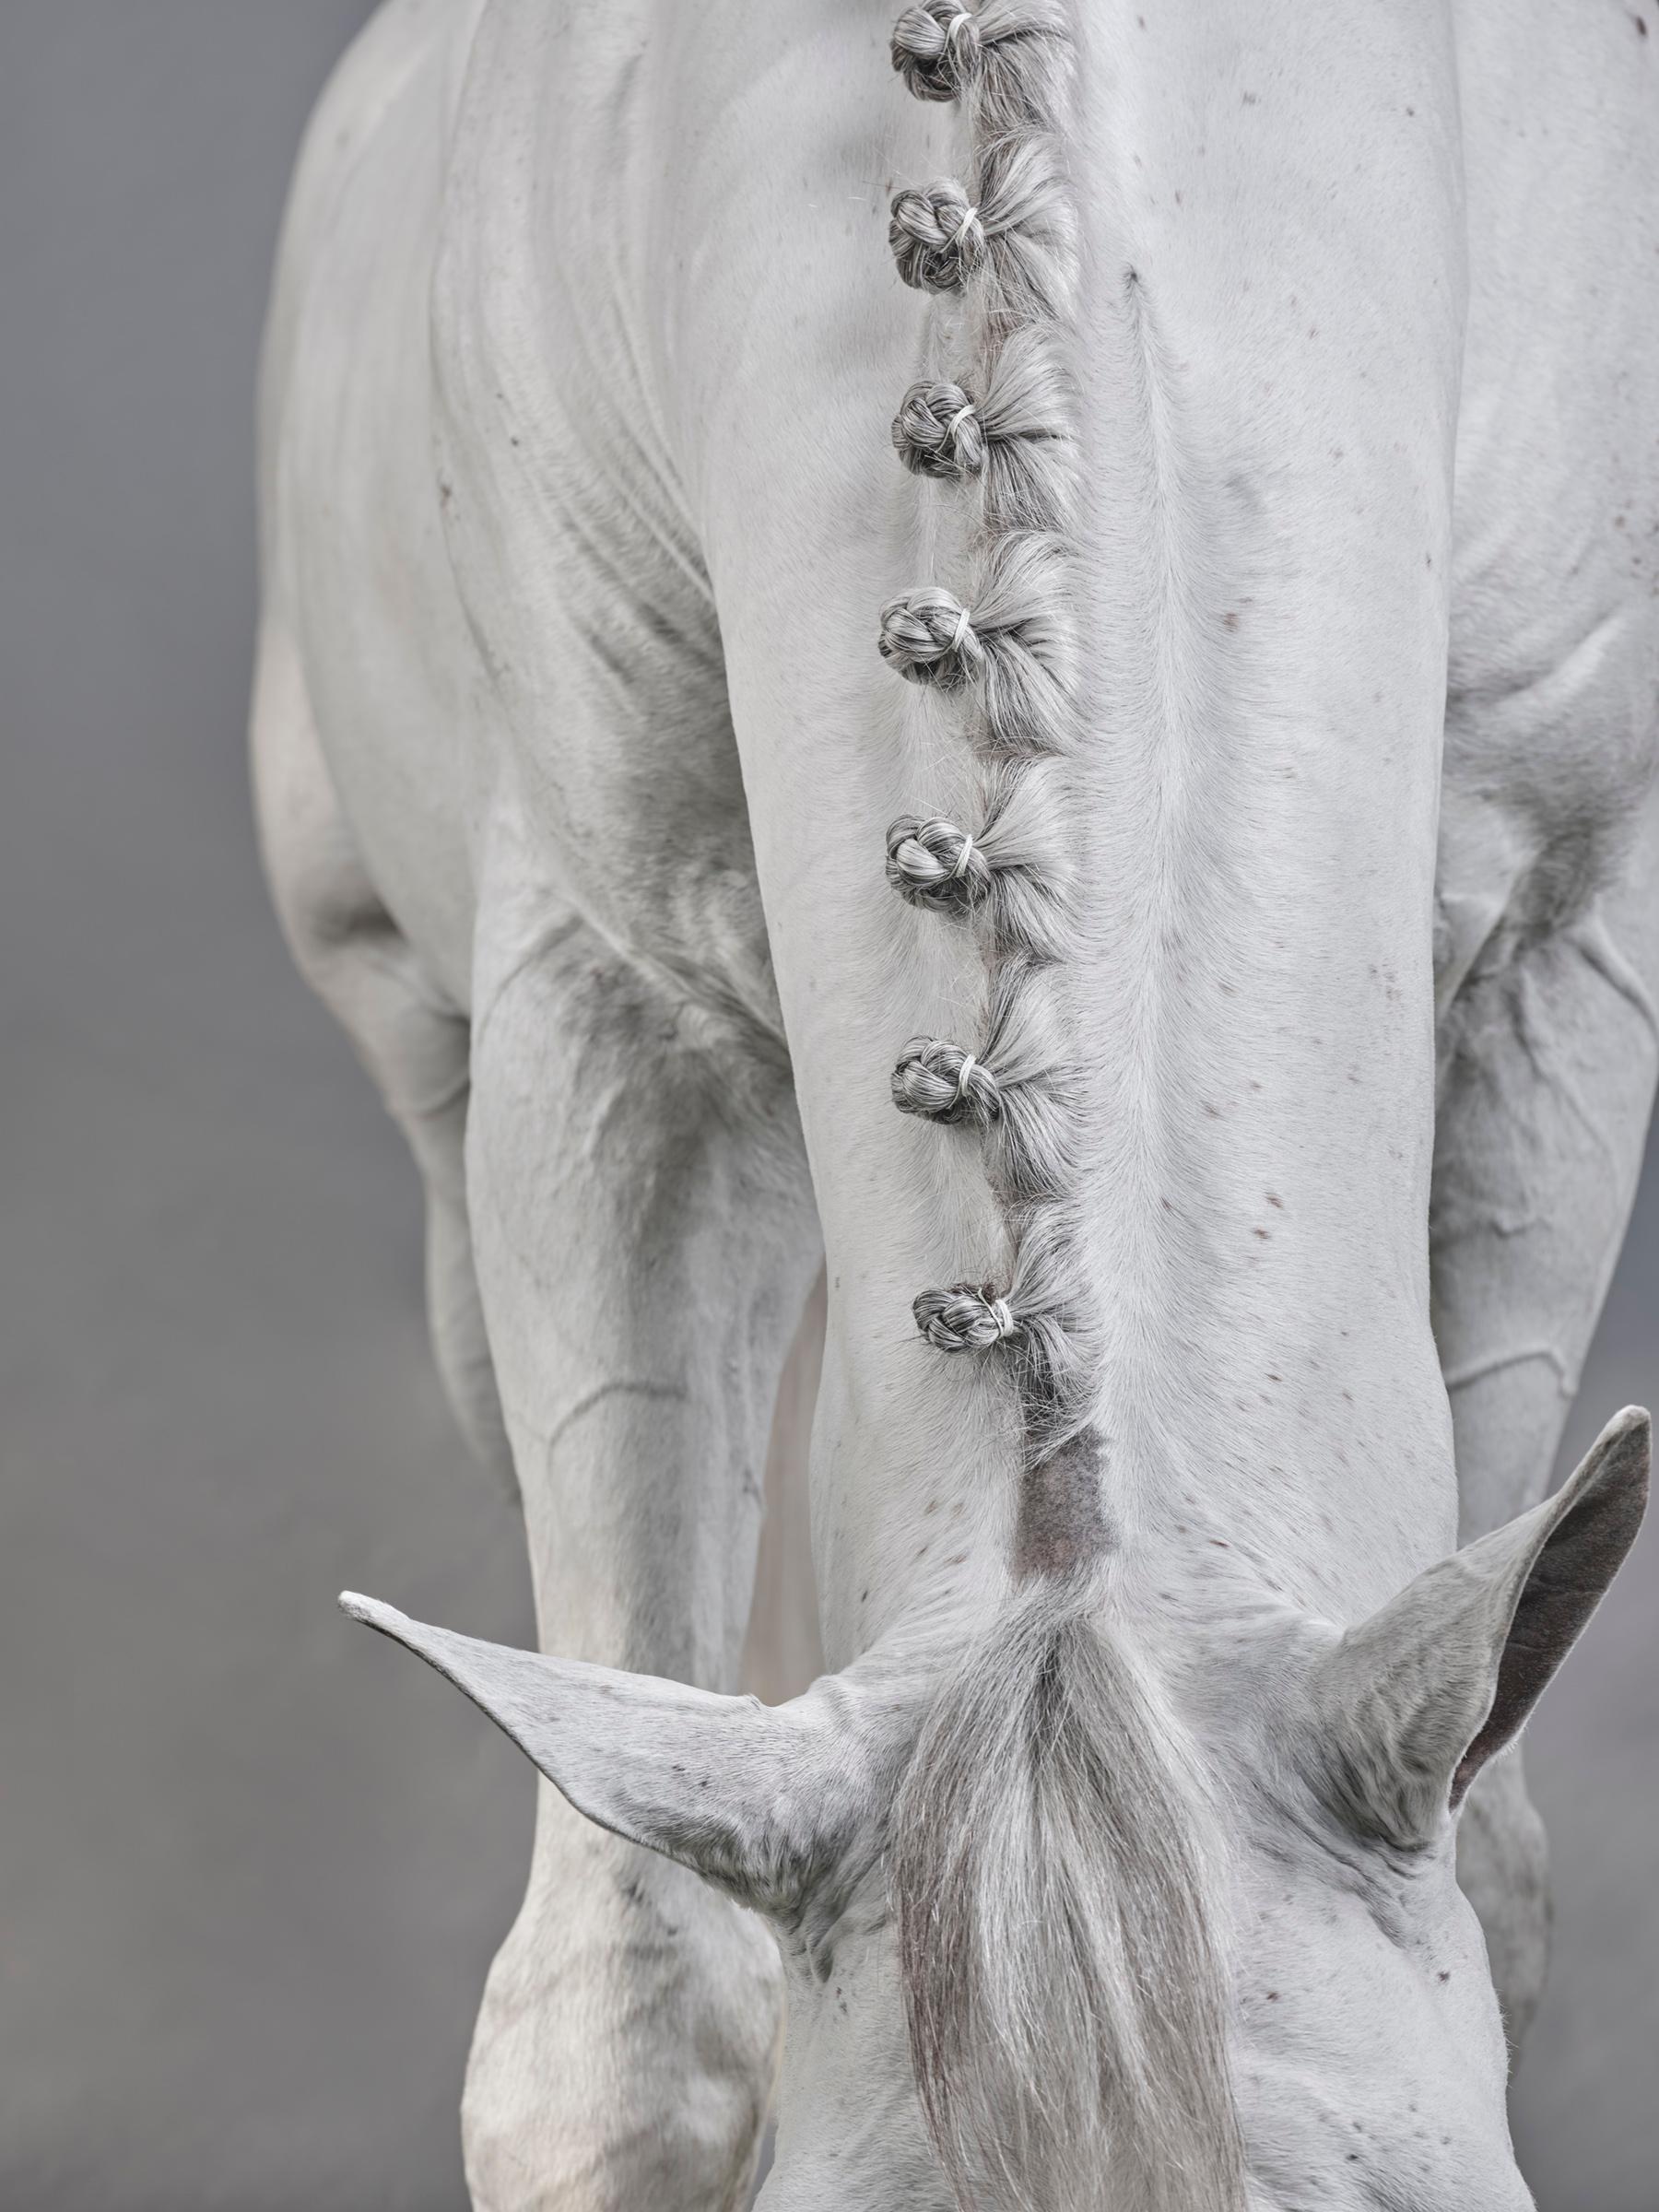 Juan Lamarca Abstract Photograph - Casper III - B&W Limited Edition Horse Portrait 2019